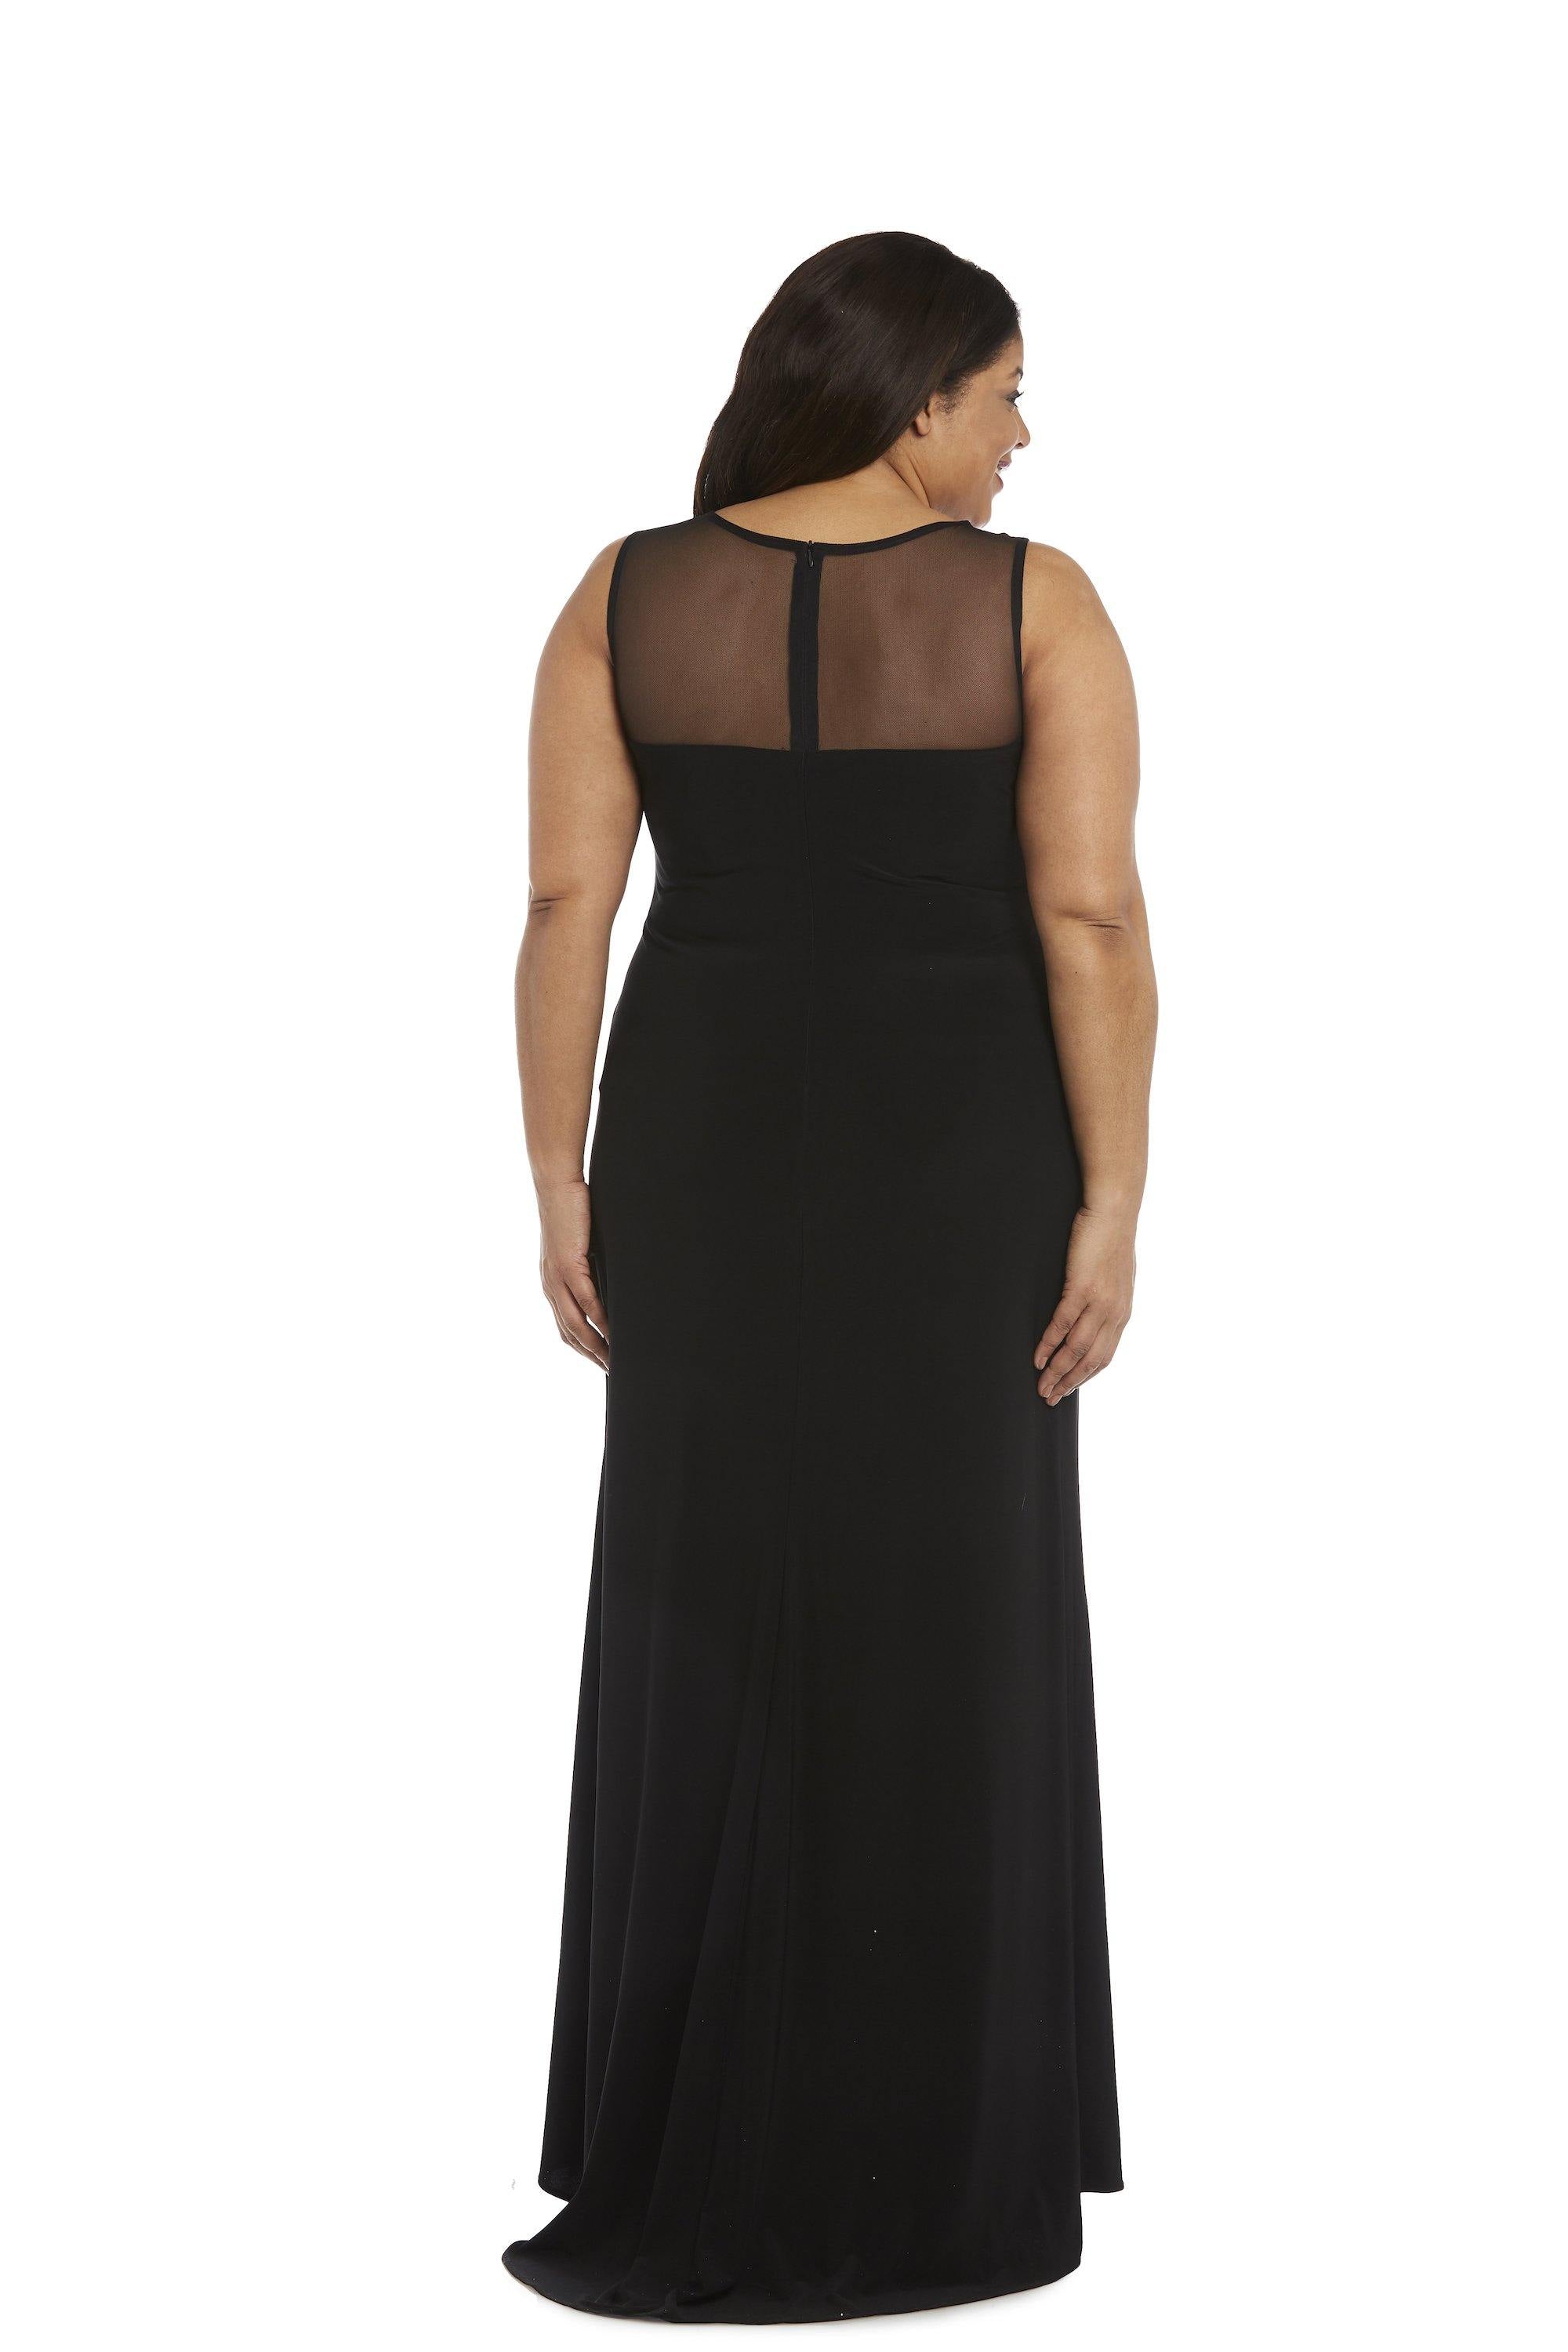 Morgan & Co Plus Size Long Formal Dress 12332WMM - The Dress Outlet